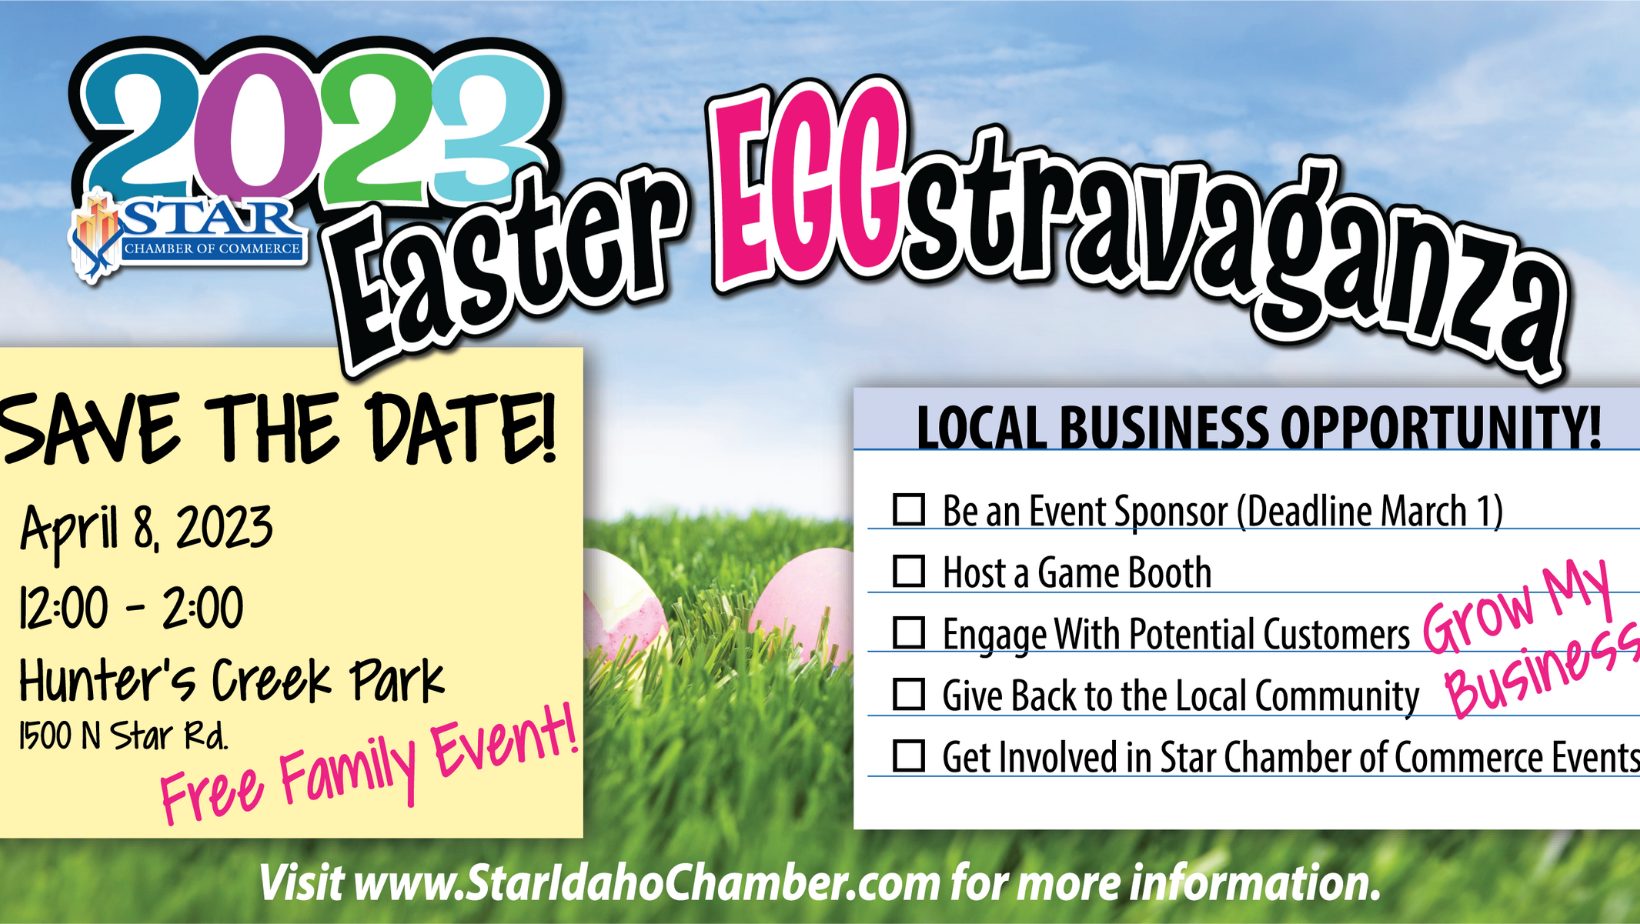 2023 Easter Eggstravaganza 